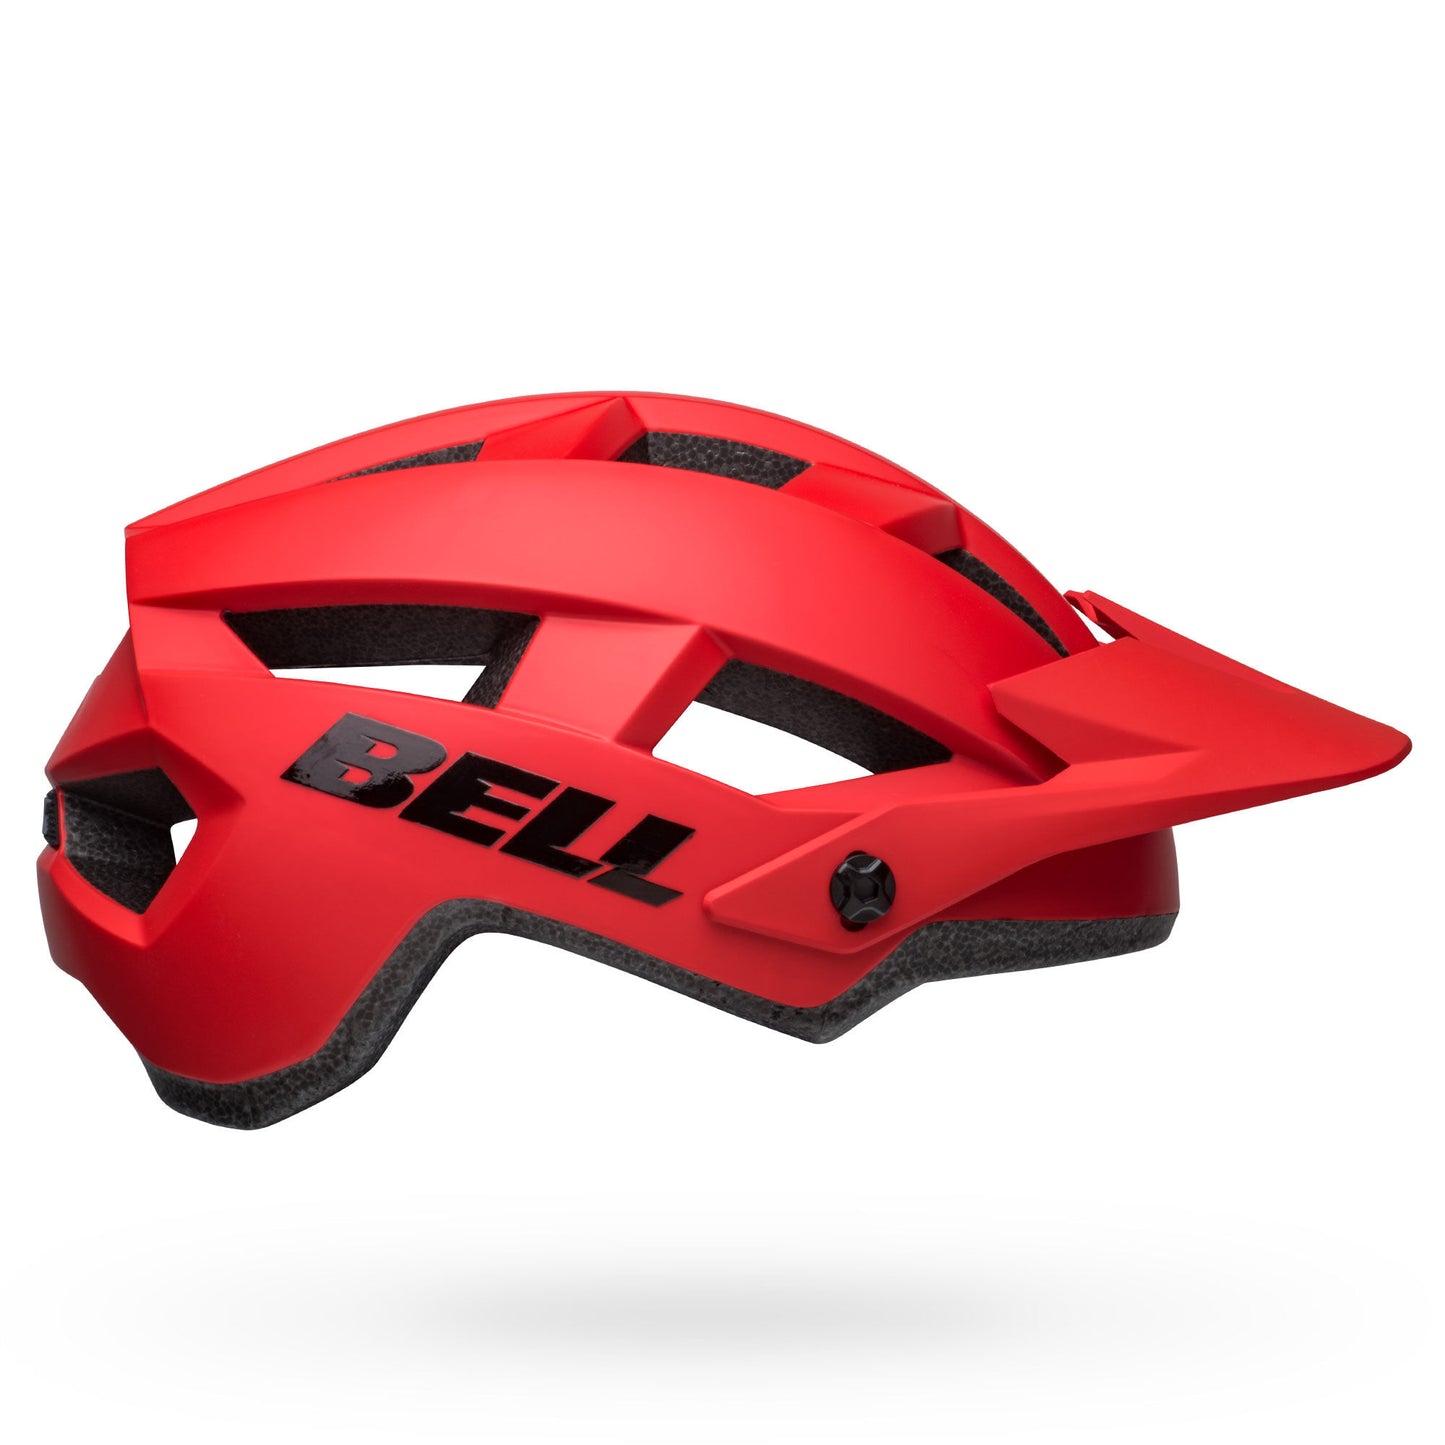 Bell Spark 2 MIPS Helmet Matte Red - Bell Bike Helmets